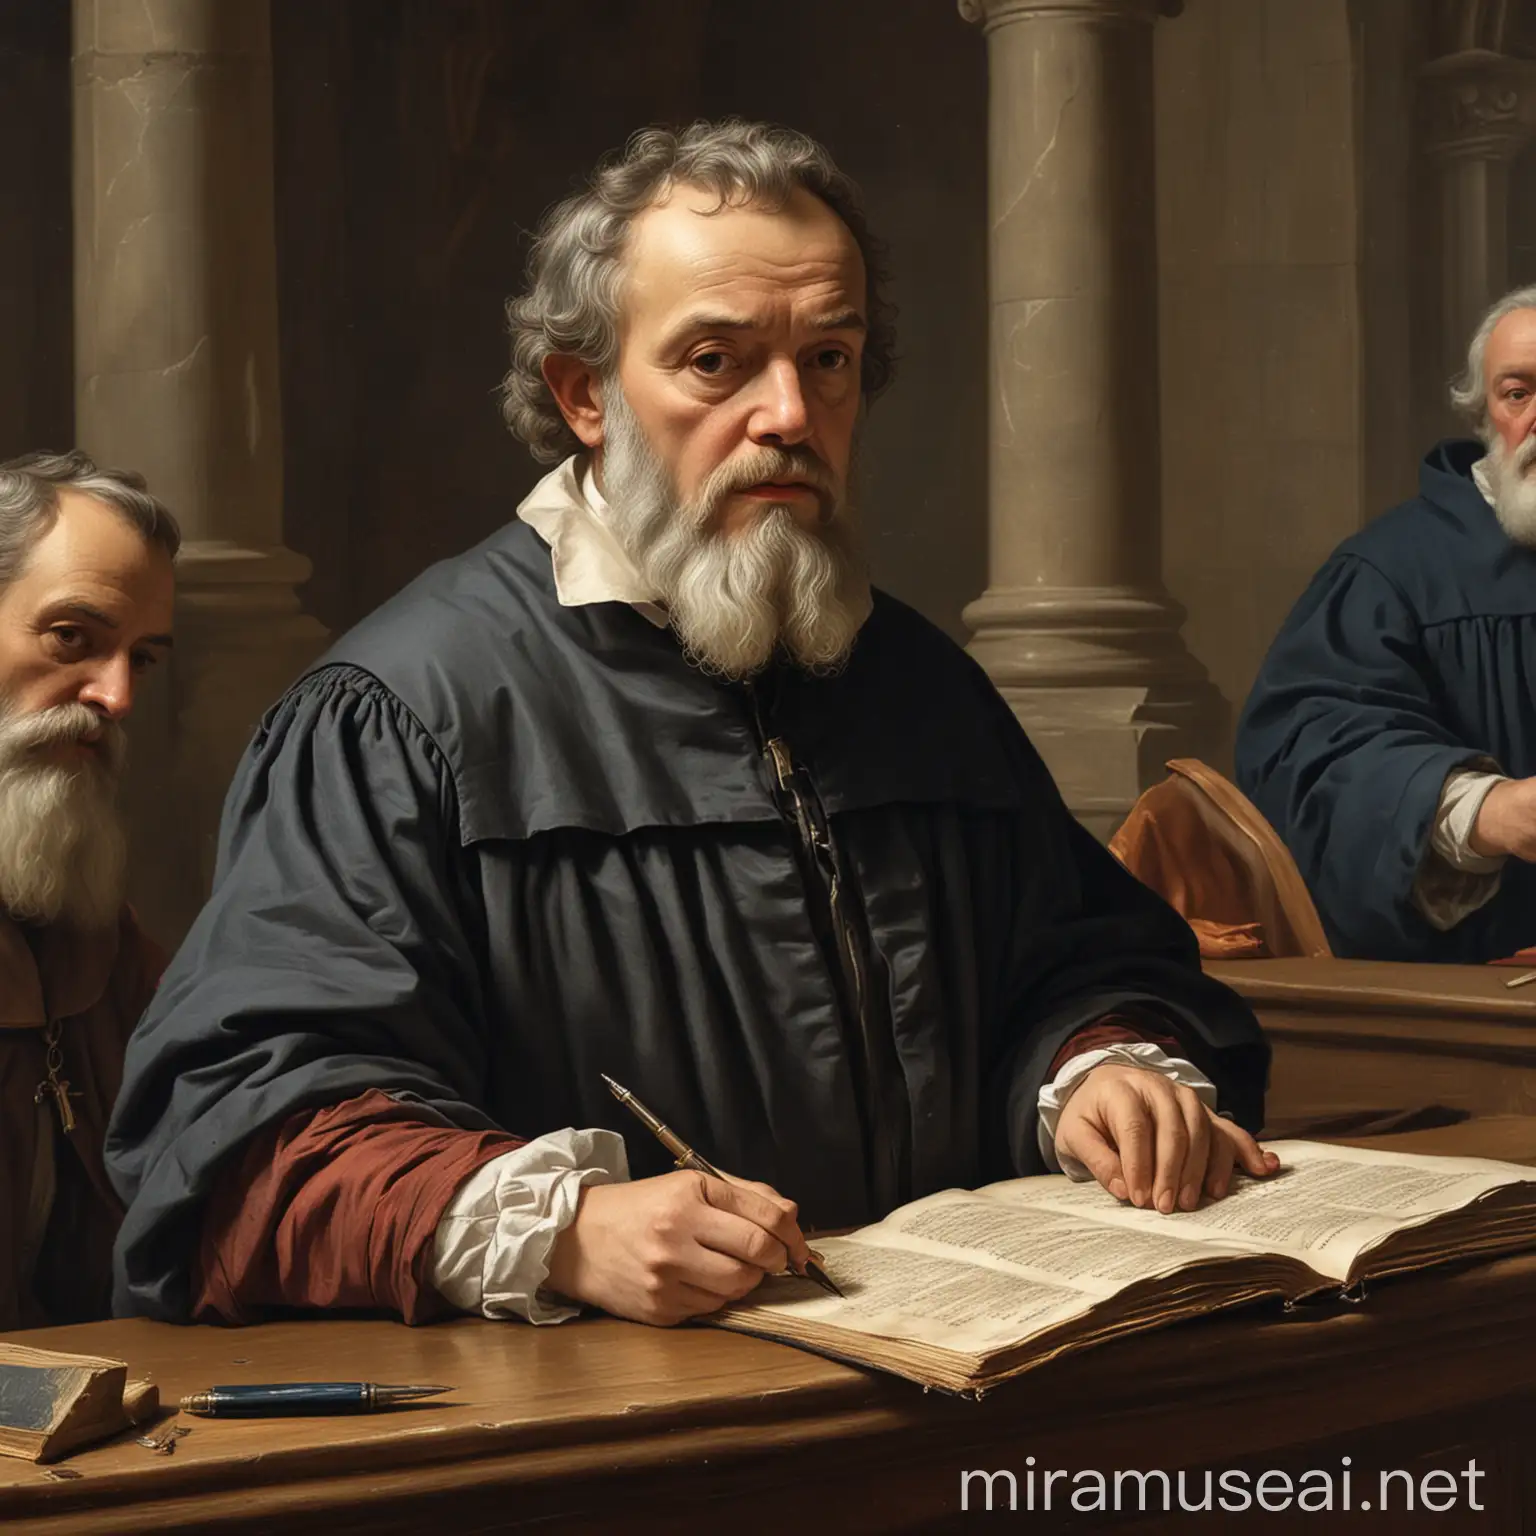 Draw Galileo on trial in church.